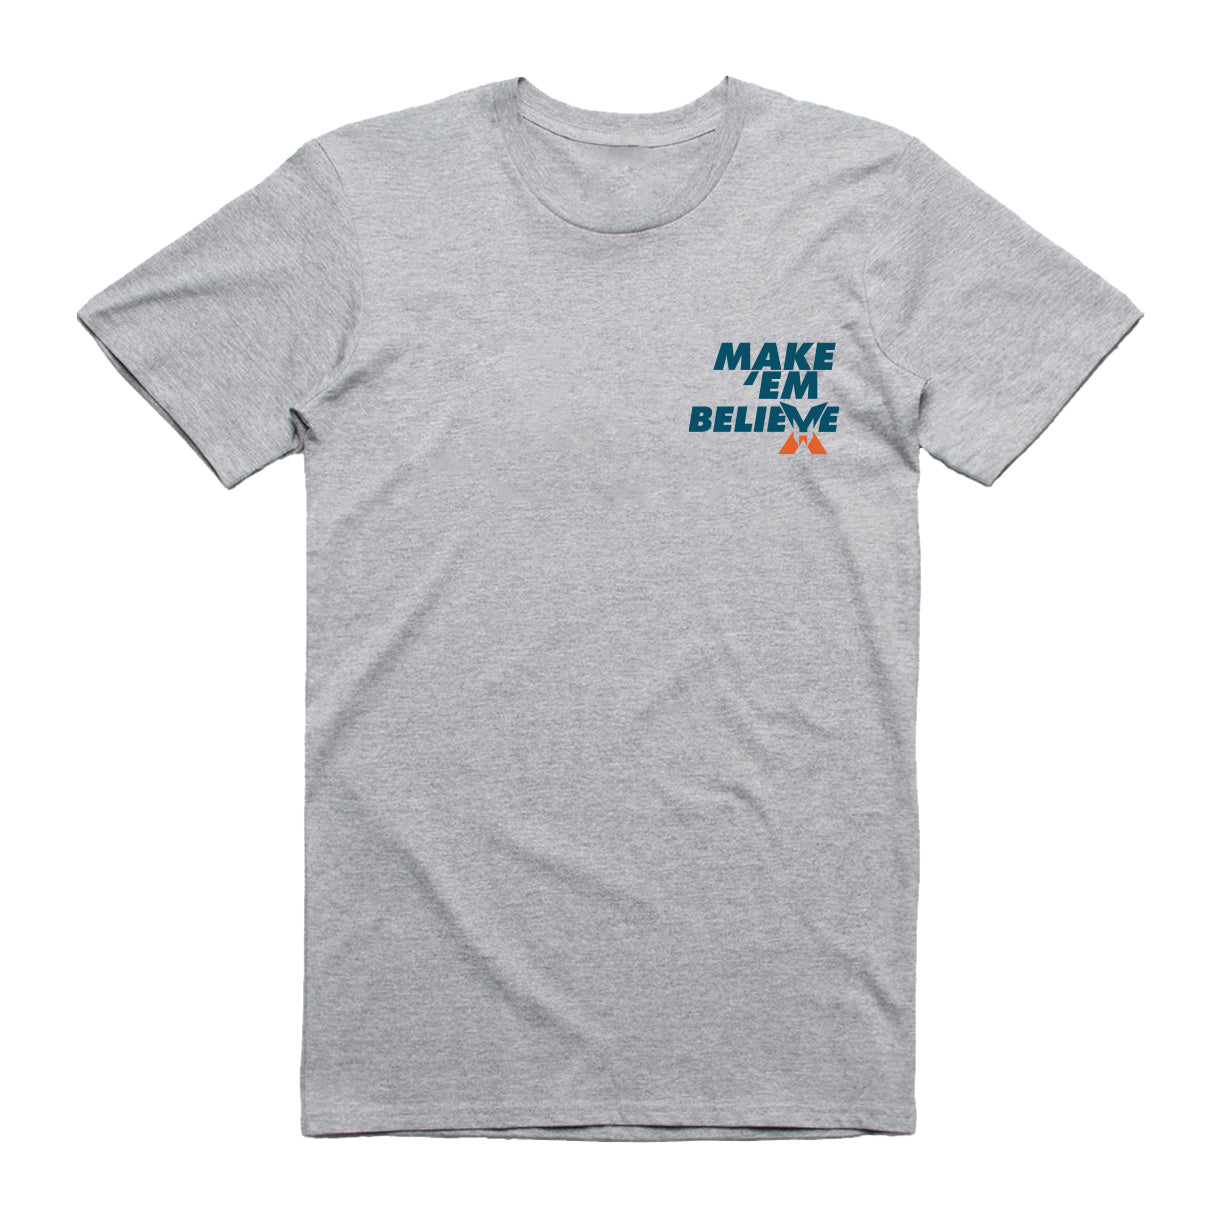 Make 'Em Believe Grey T-Shirt